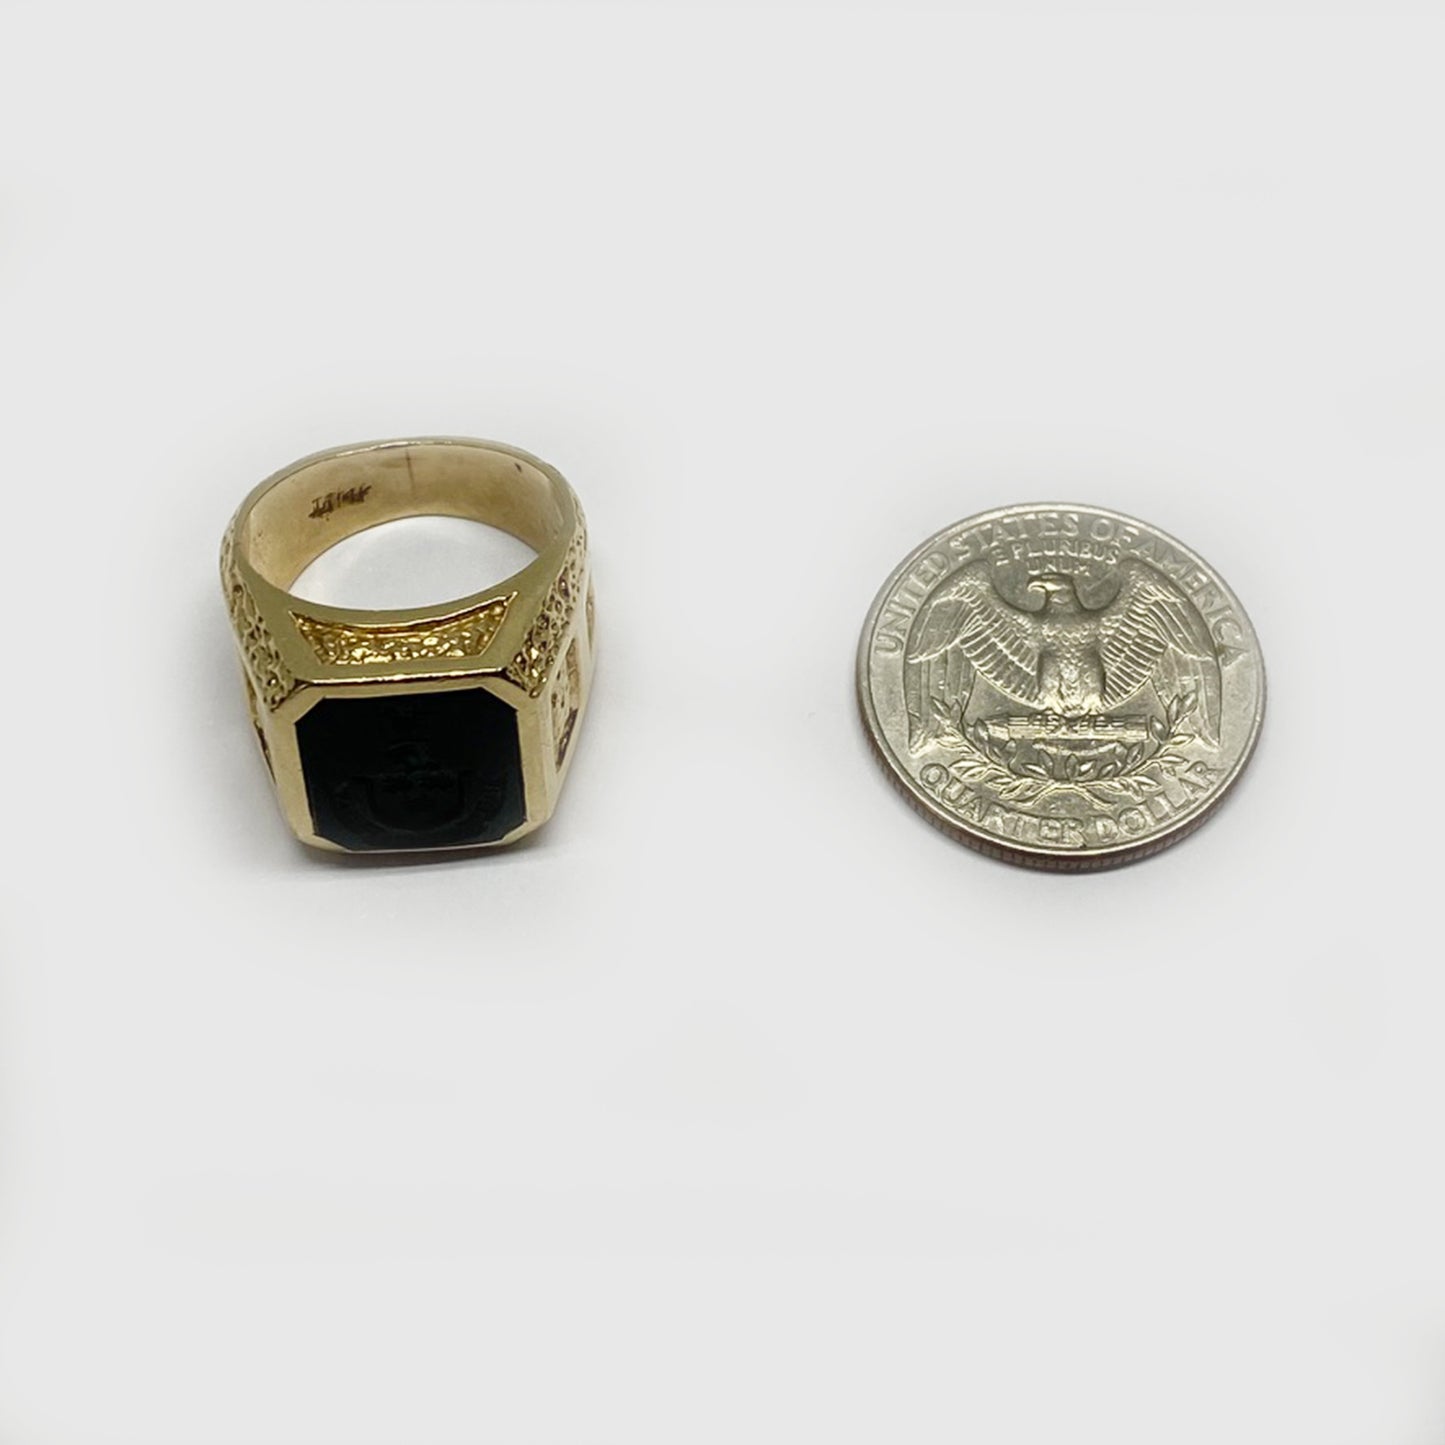 Antique 14k Gold Intaglio Ring, Heraldic Coat Of Arms Motto, Blood Stone Signet Ring